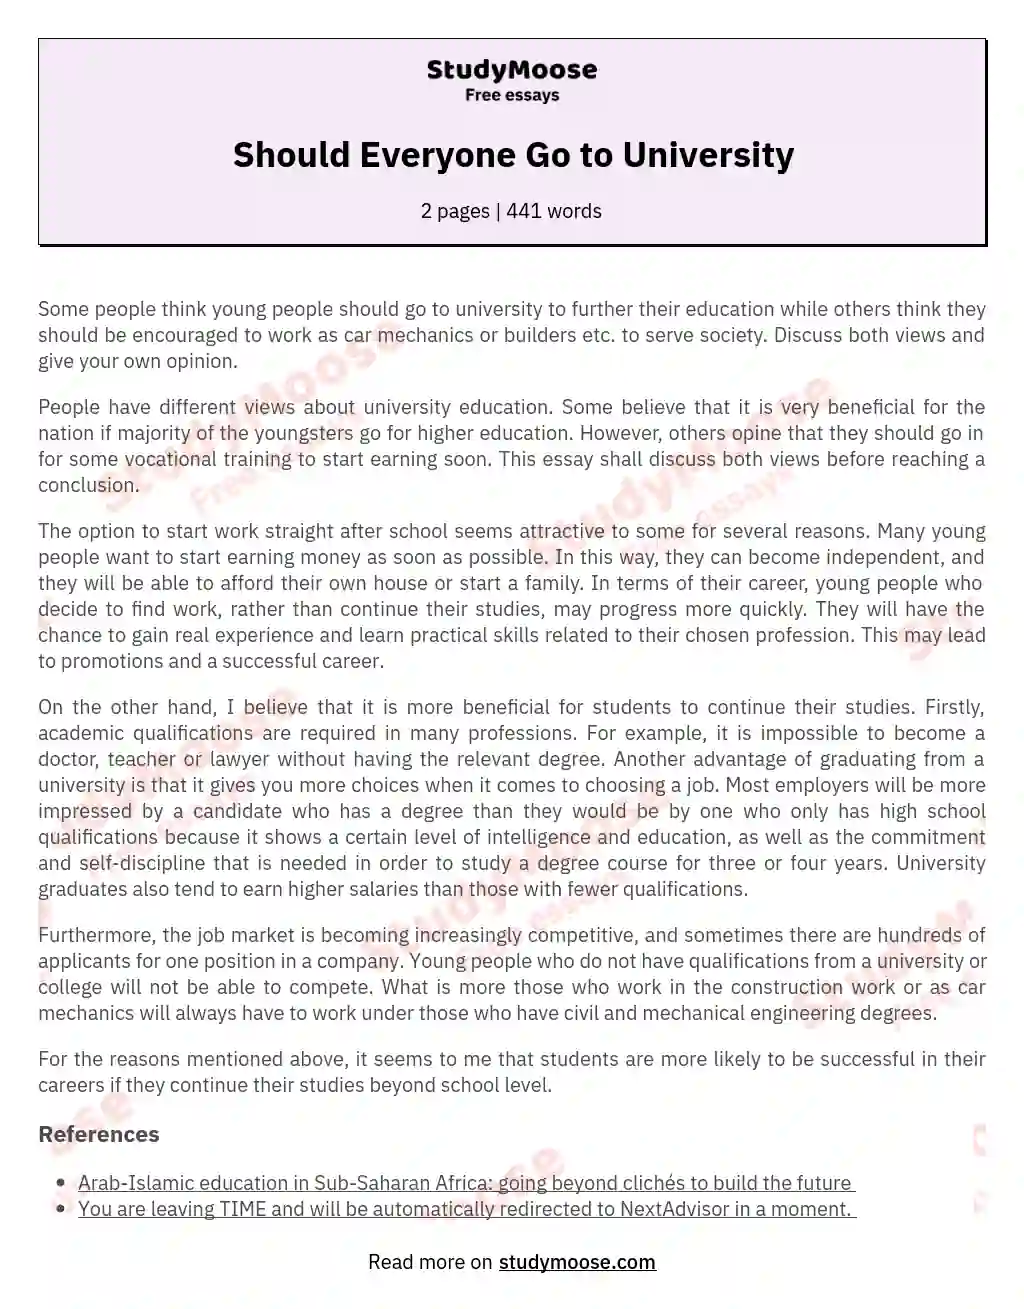 Should Everyone Go to University essay